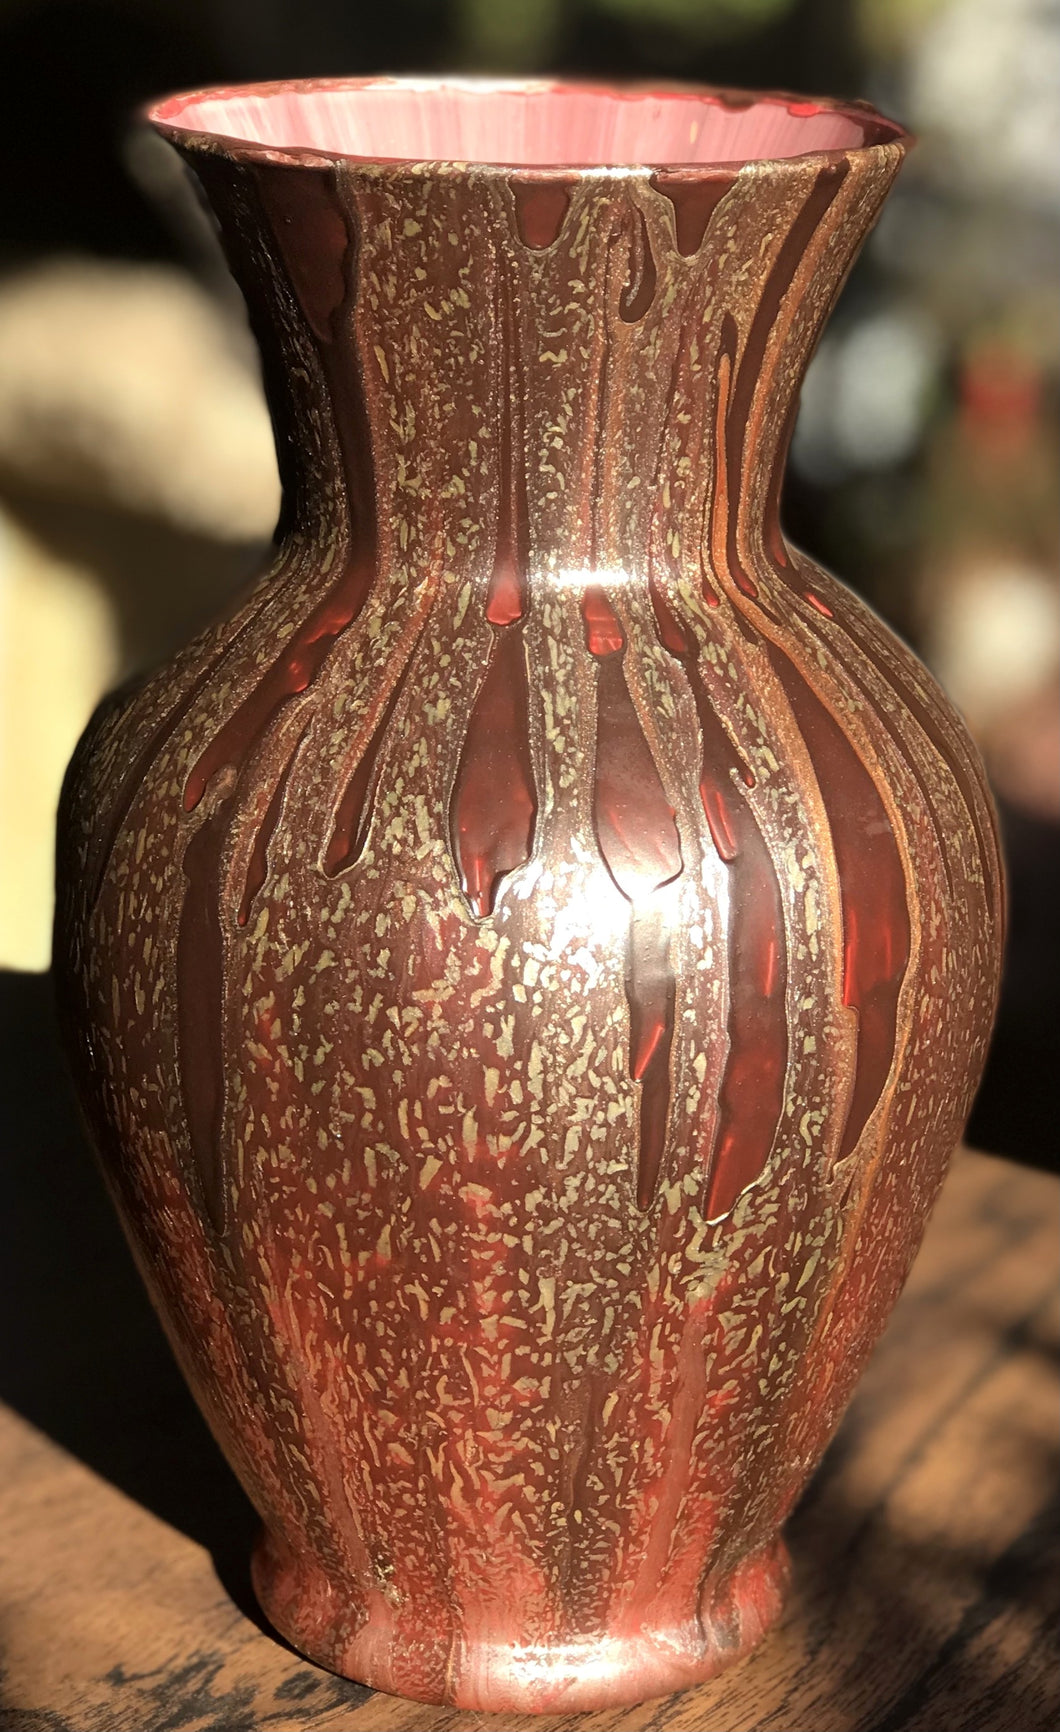 Poured Brown/Gold/Copper Vase